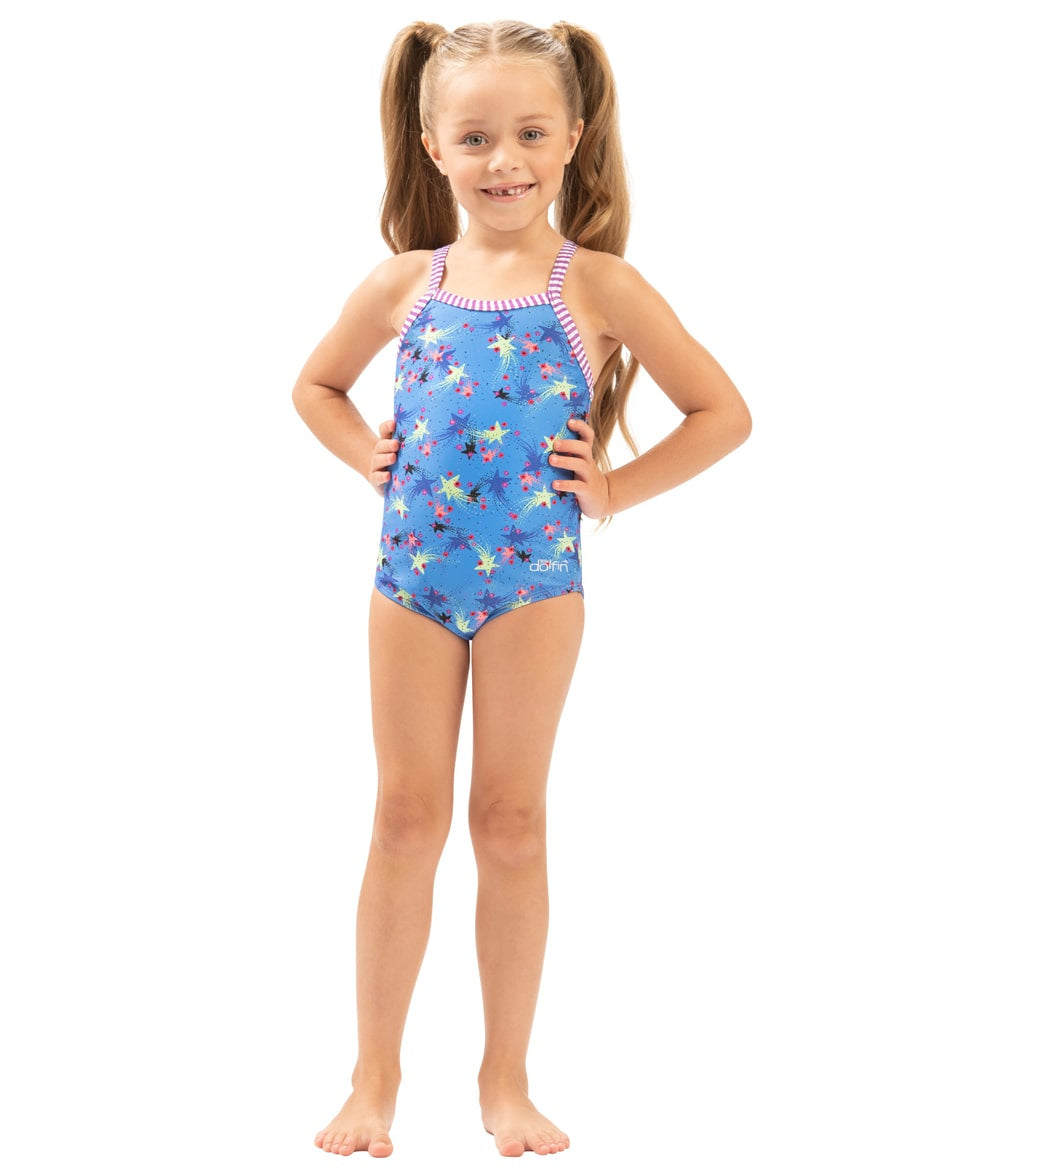 Dolfin Girls Printed One Piece Swimsuit (Big Kid)